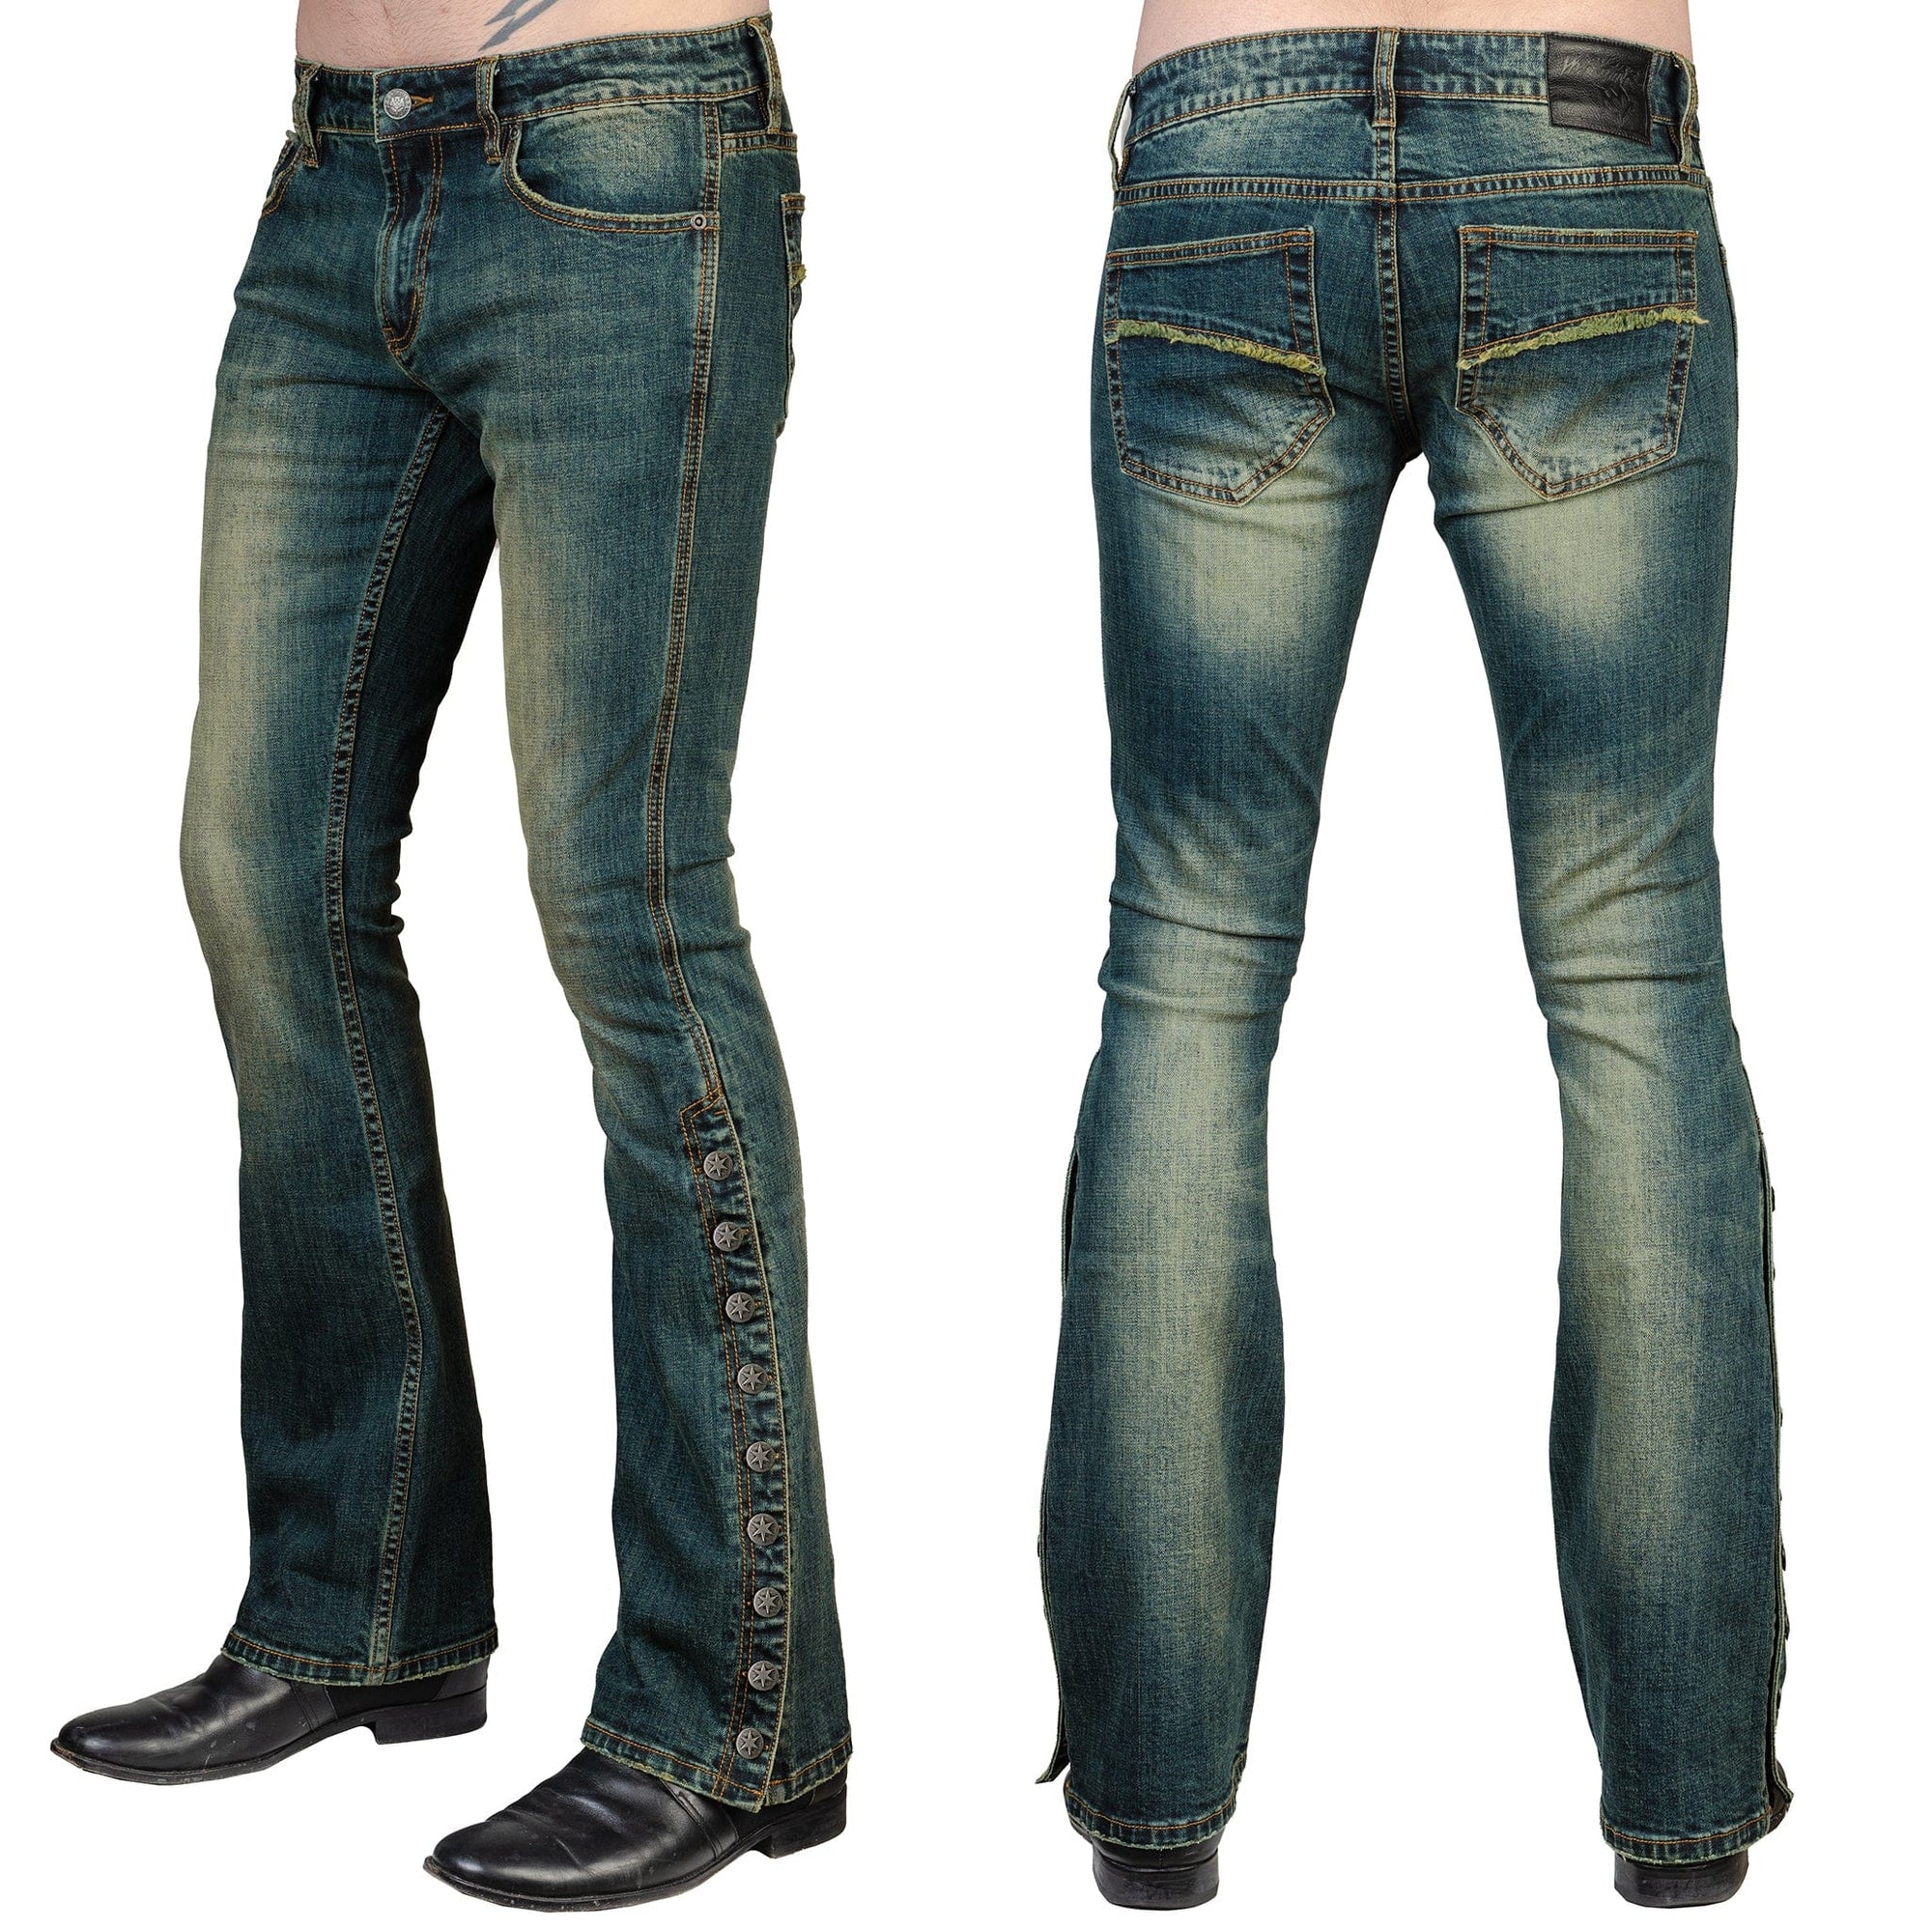 Wornstar Clothing Mens Jeans Hellraiser Denim Pants With Side Buttons - Vintage Blue